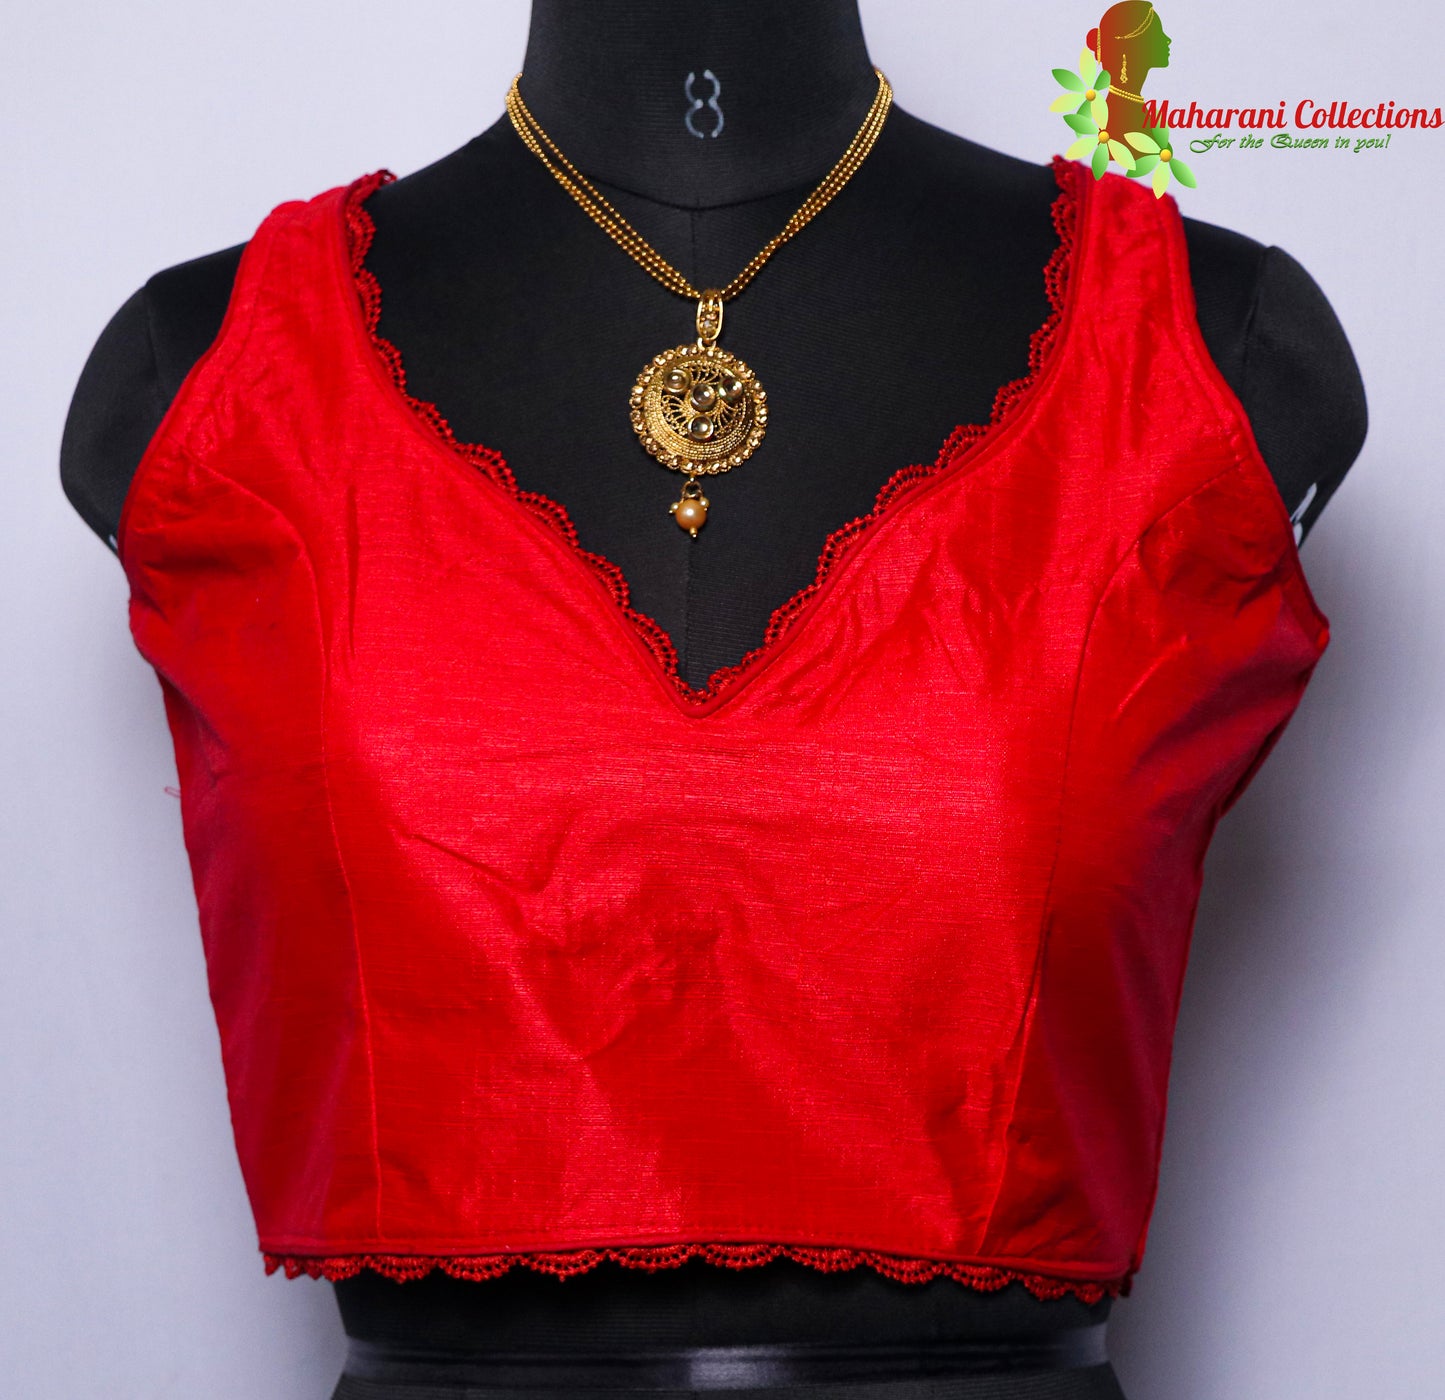 Maharani's Linen Silk Lace Blouse - Red